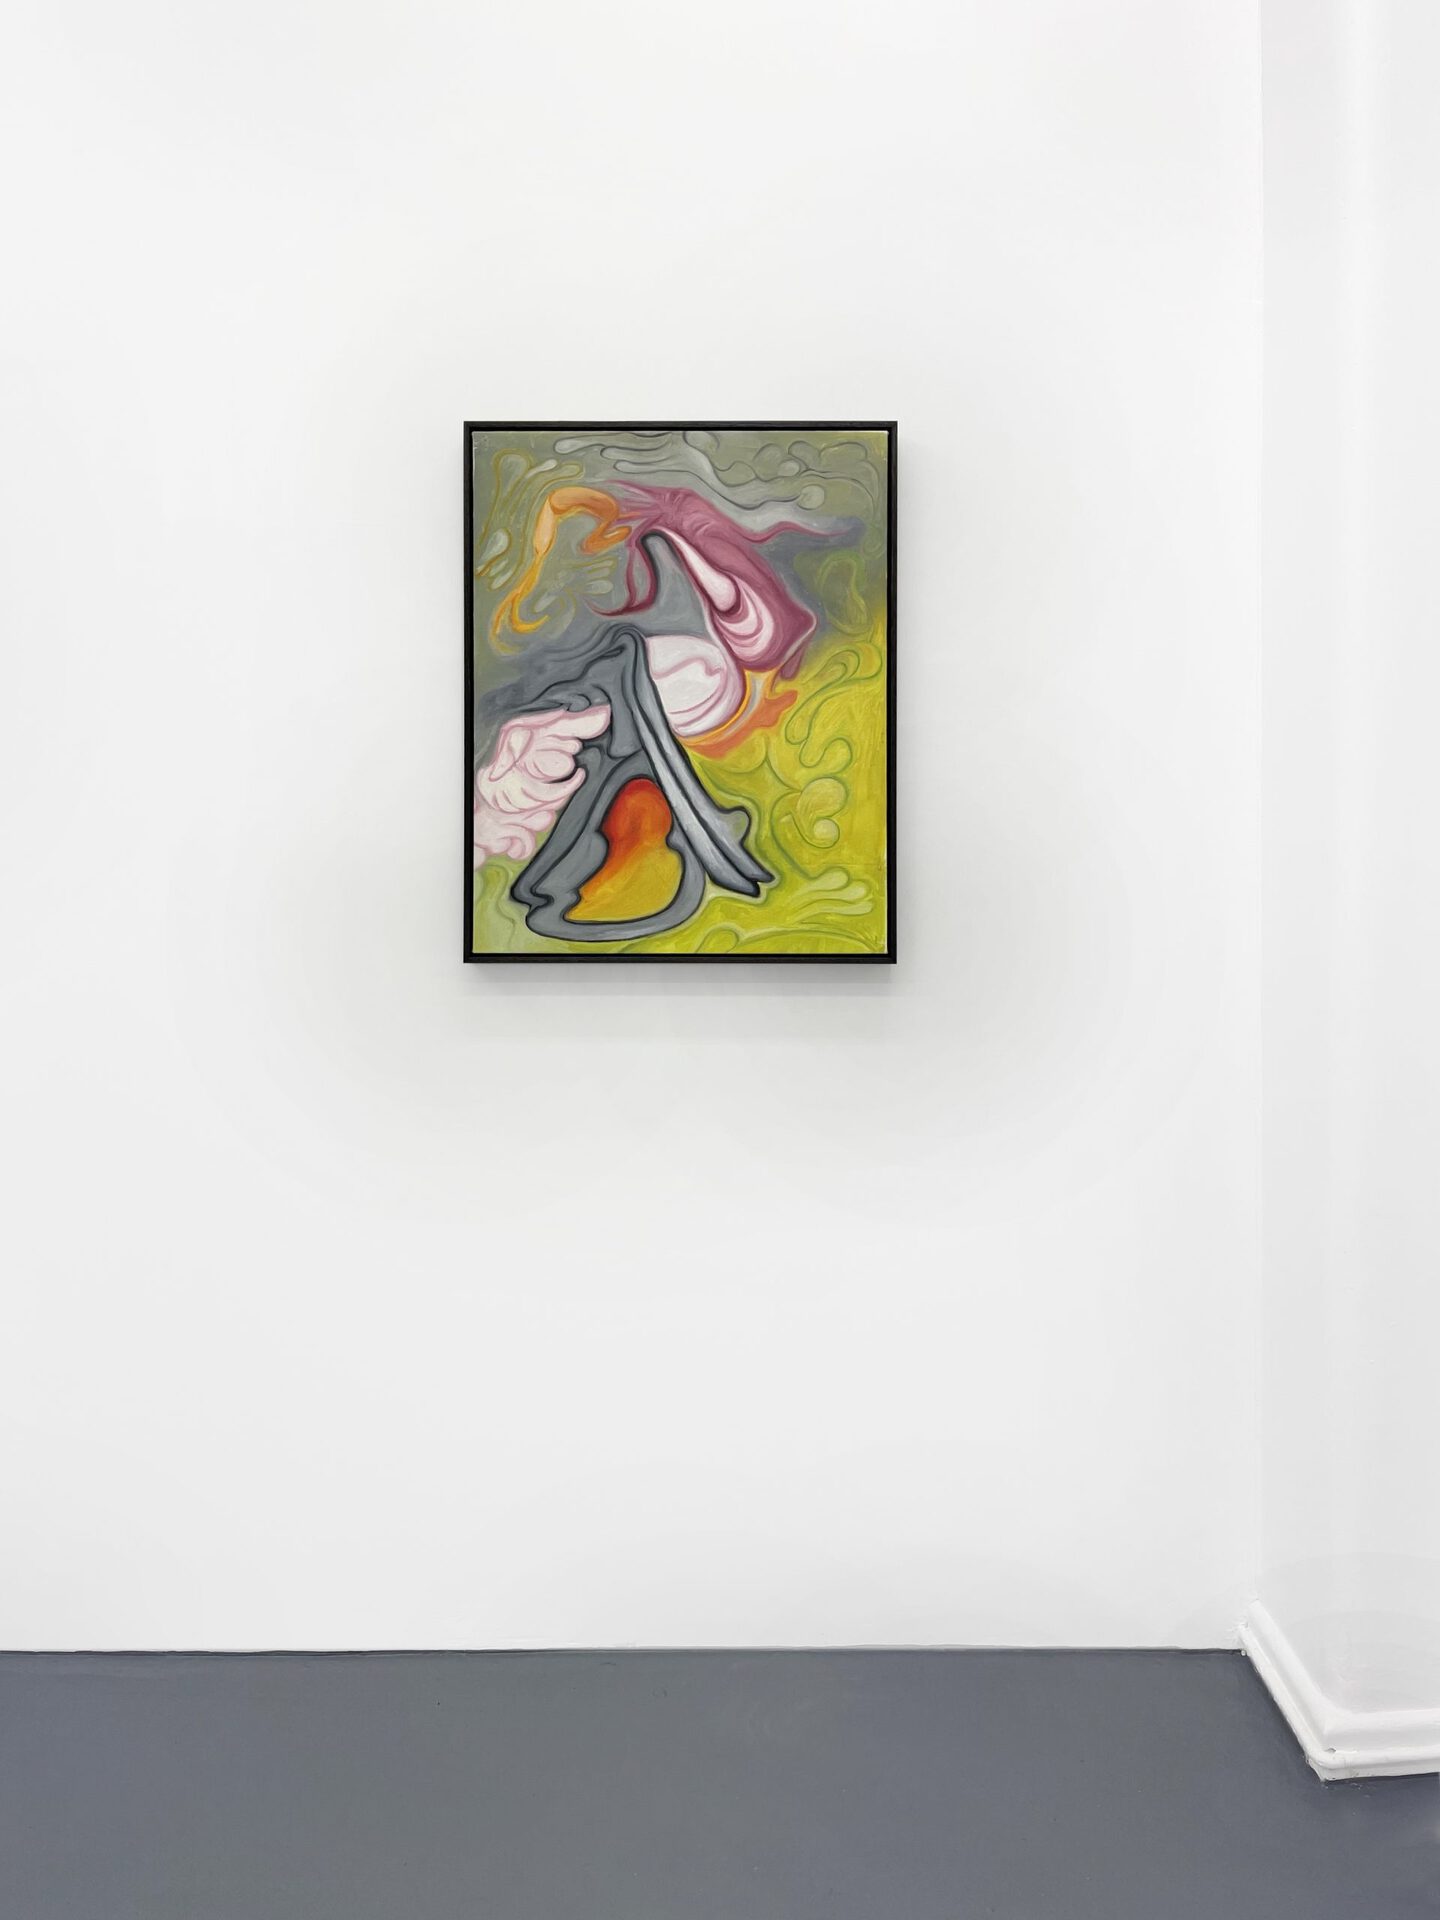 Lil Palser Barto, 'Untitled', 2020, oil on canvas, 80 x 65